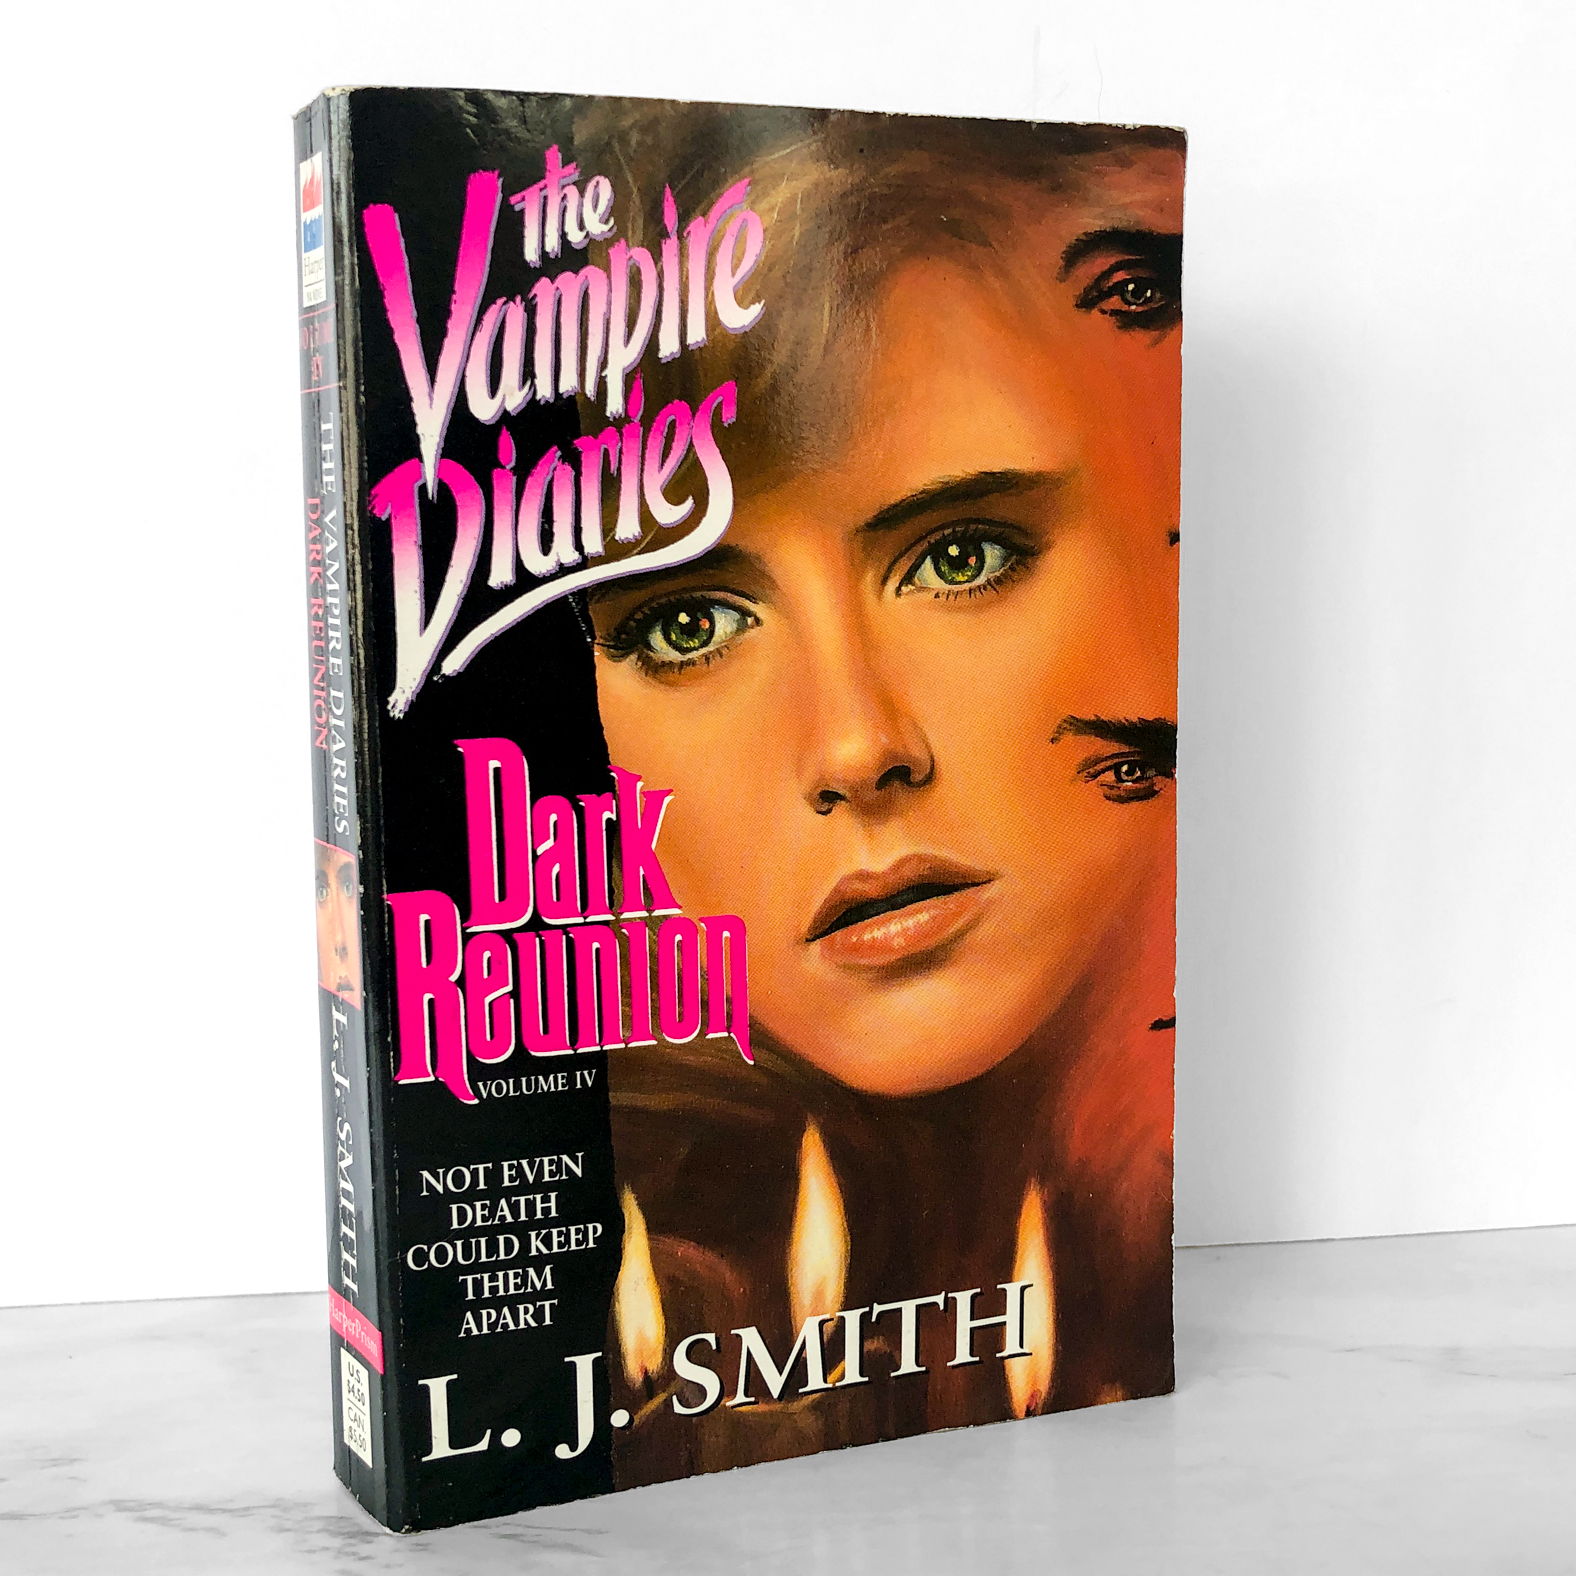 The Vampire Diaries Vol IV: Dark Reunion by L.J. Smith [PRISM PAPERBAC